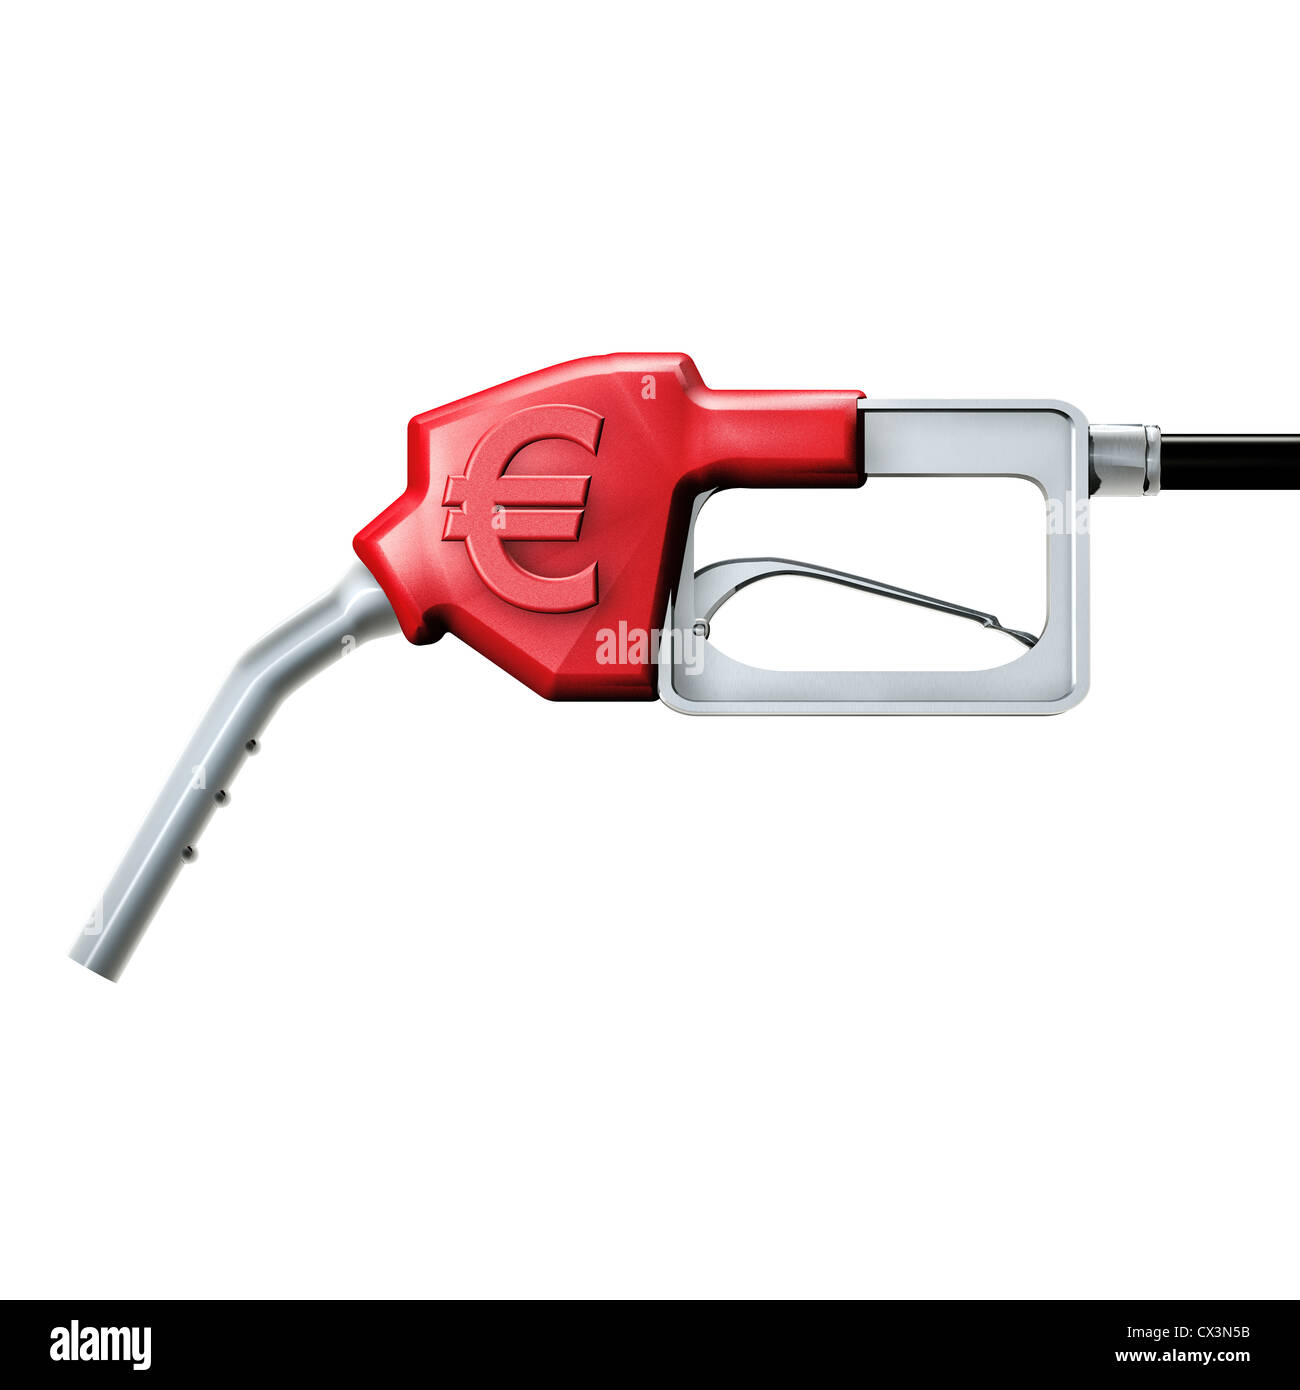 Ugello carburante con il simbolo dell'euro su bianco - Zapfpistole mit Eurozeichen auf weissem Hintergrund Foto Stock